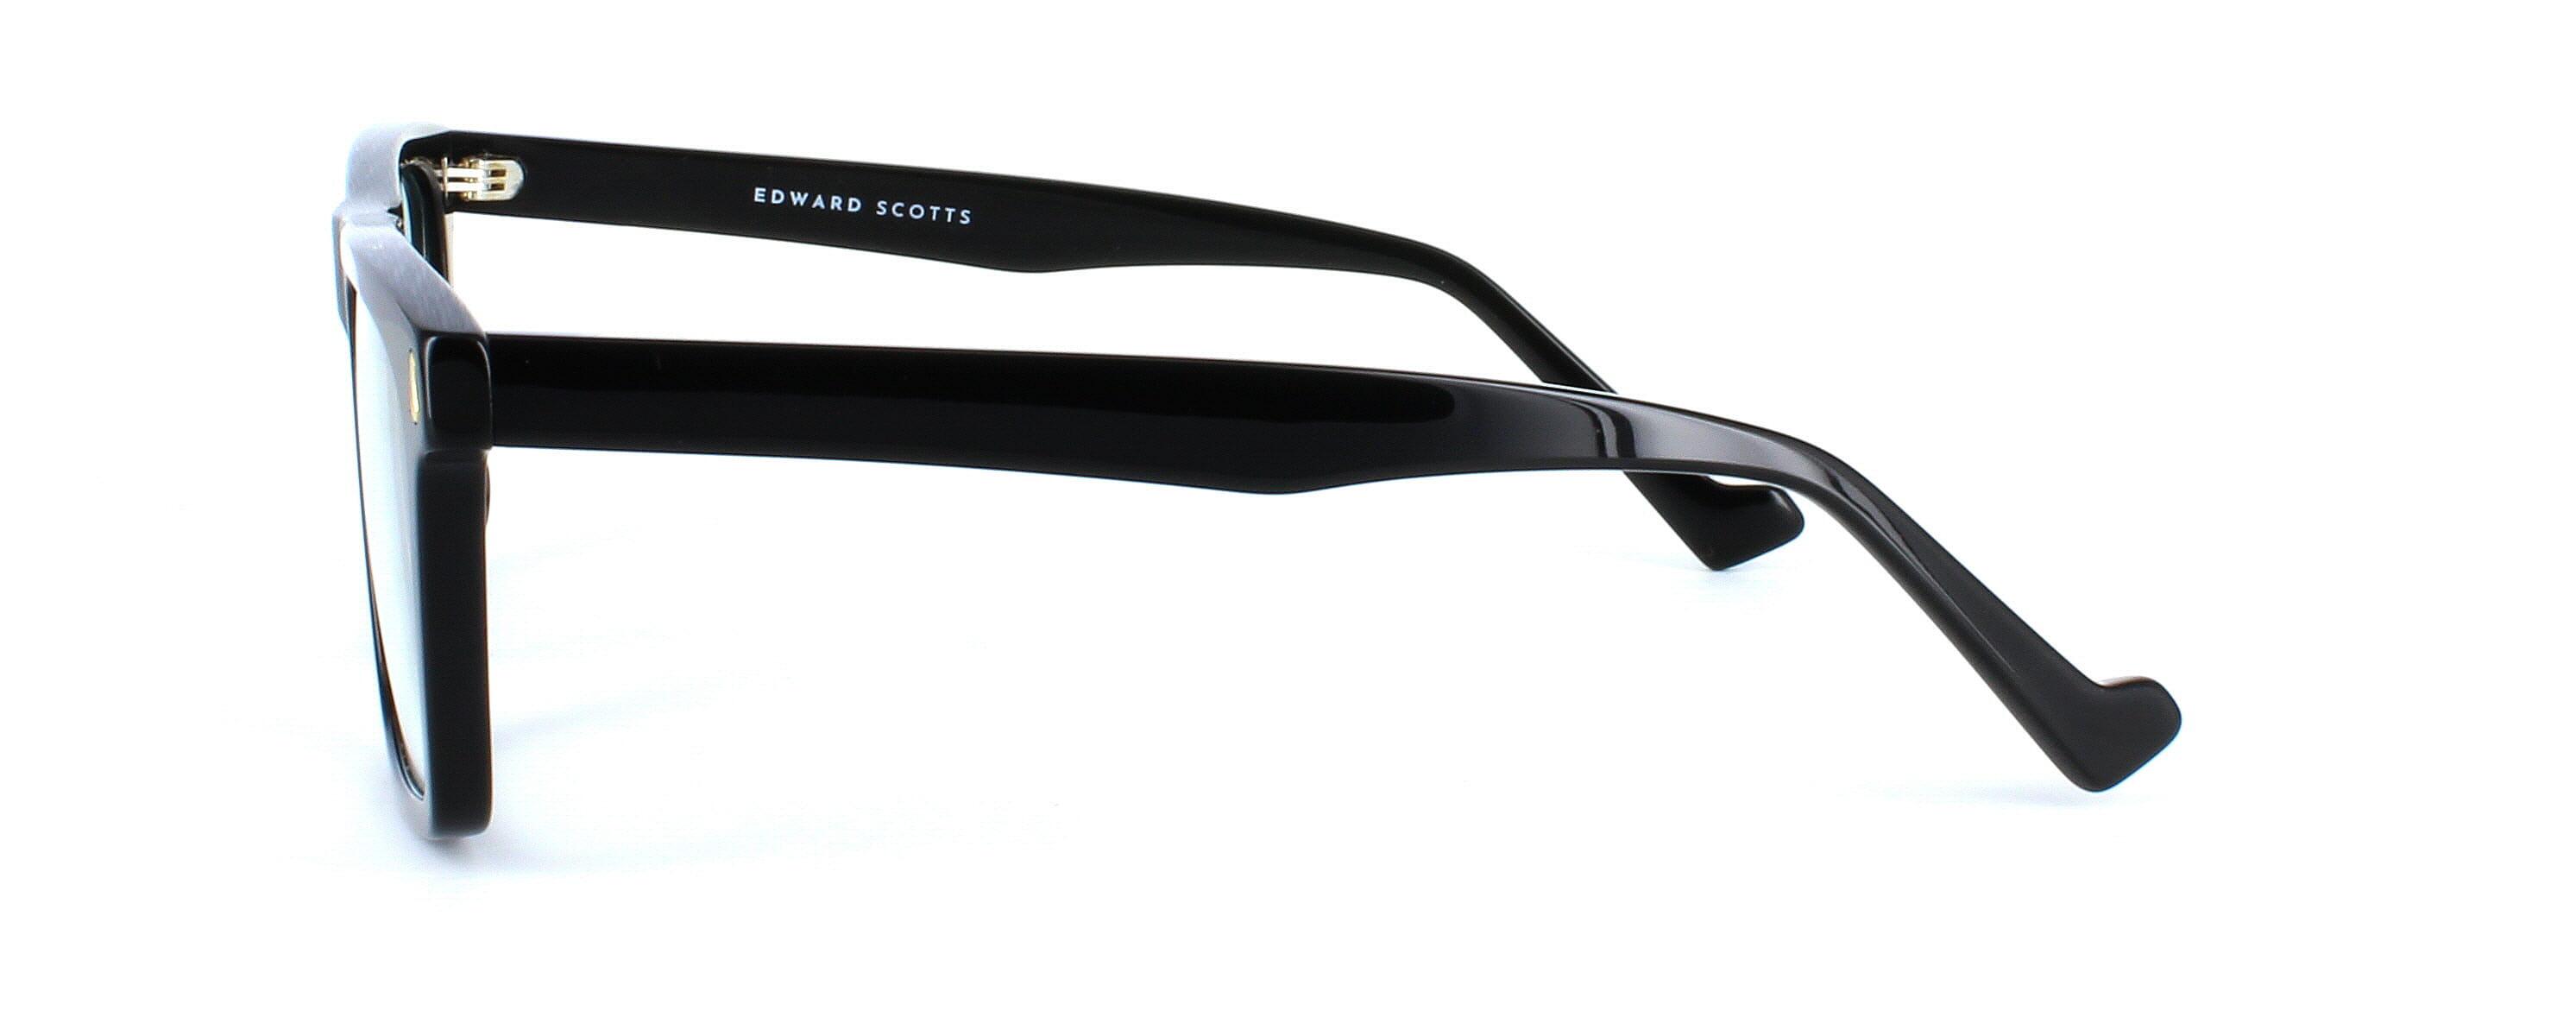 Edward Scotts PS8809 - Shiny black - Gent's bold chunky acetate glasses with rectangular shaped lenses - image view 3